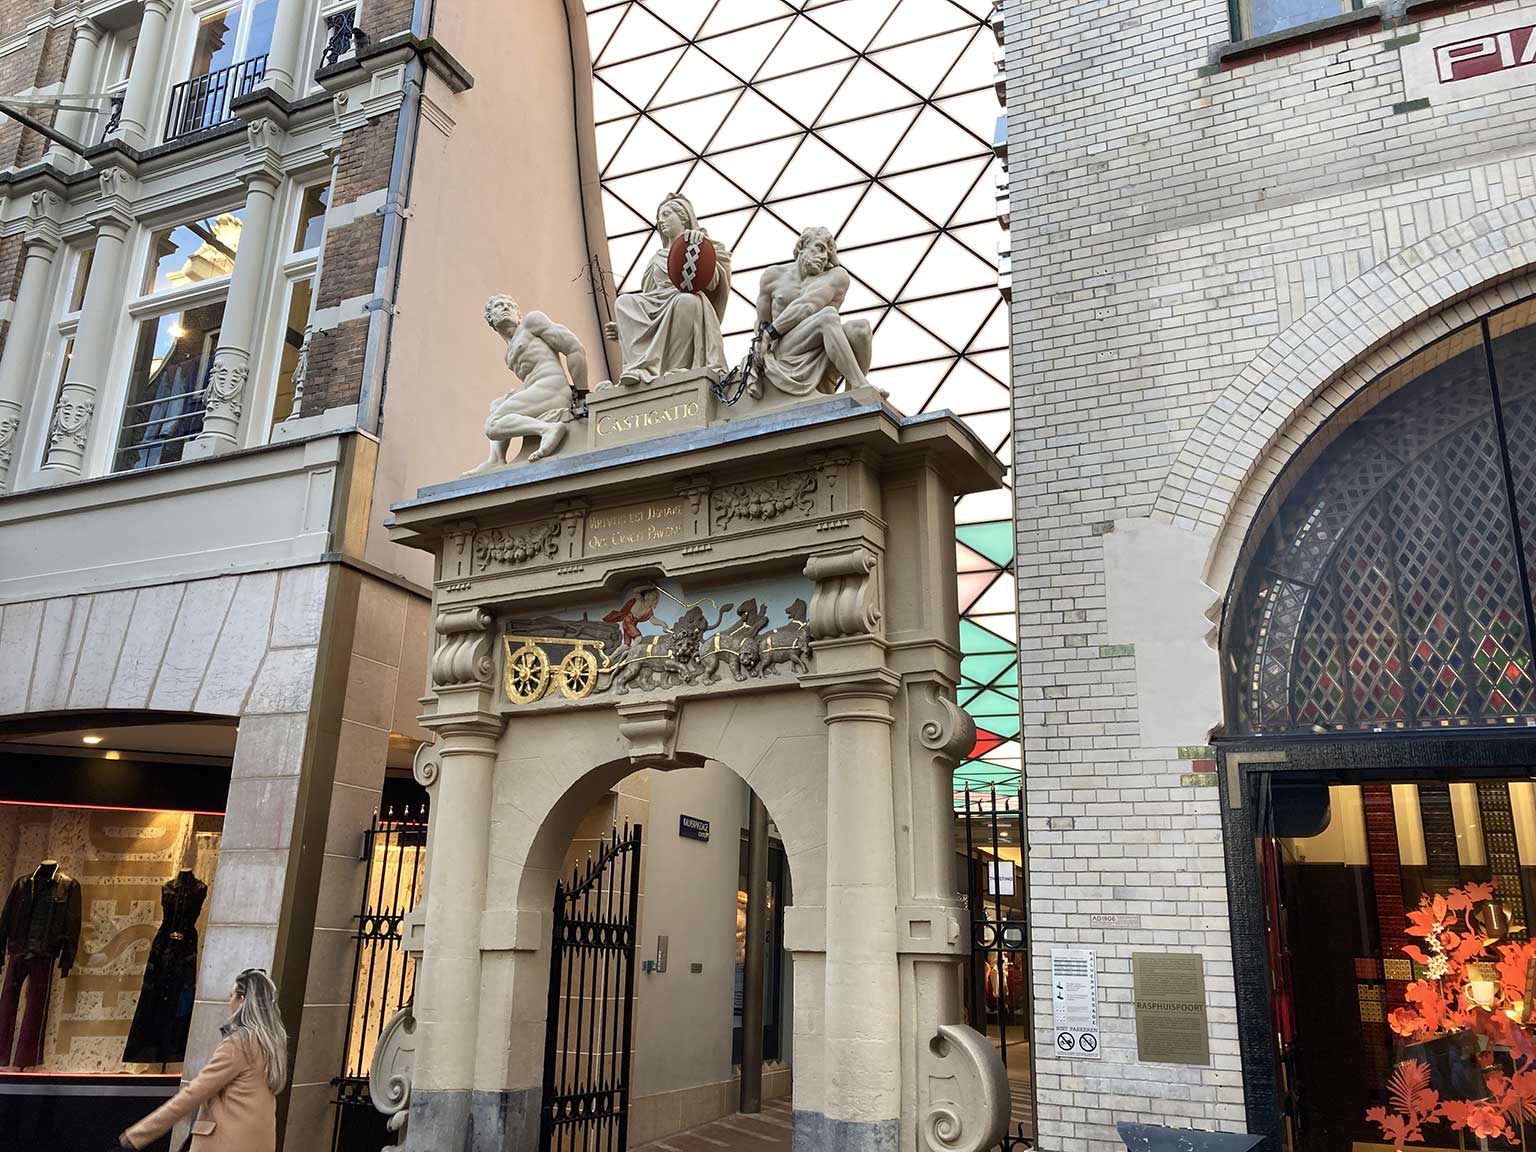 Rasphuis gate at Heiligeweg, Amsterdam, side entrance to the shopping mall